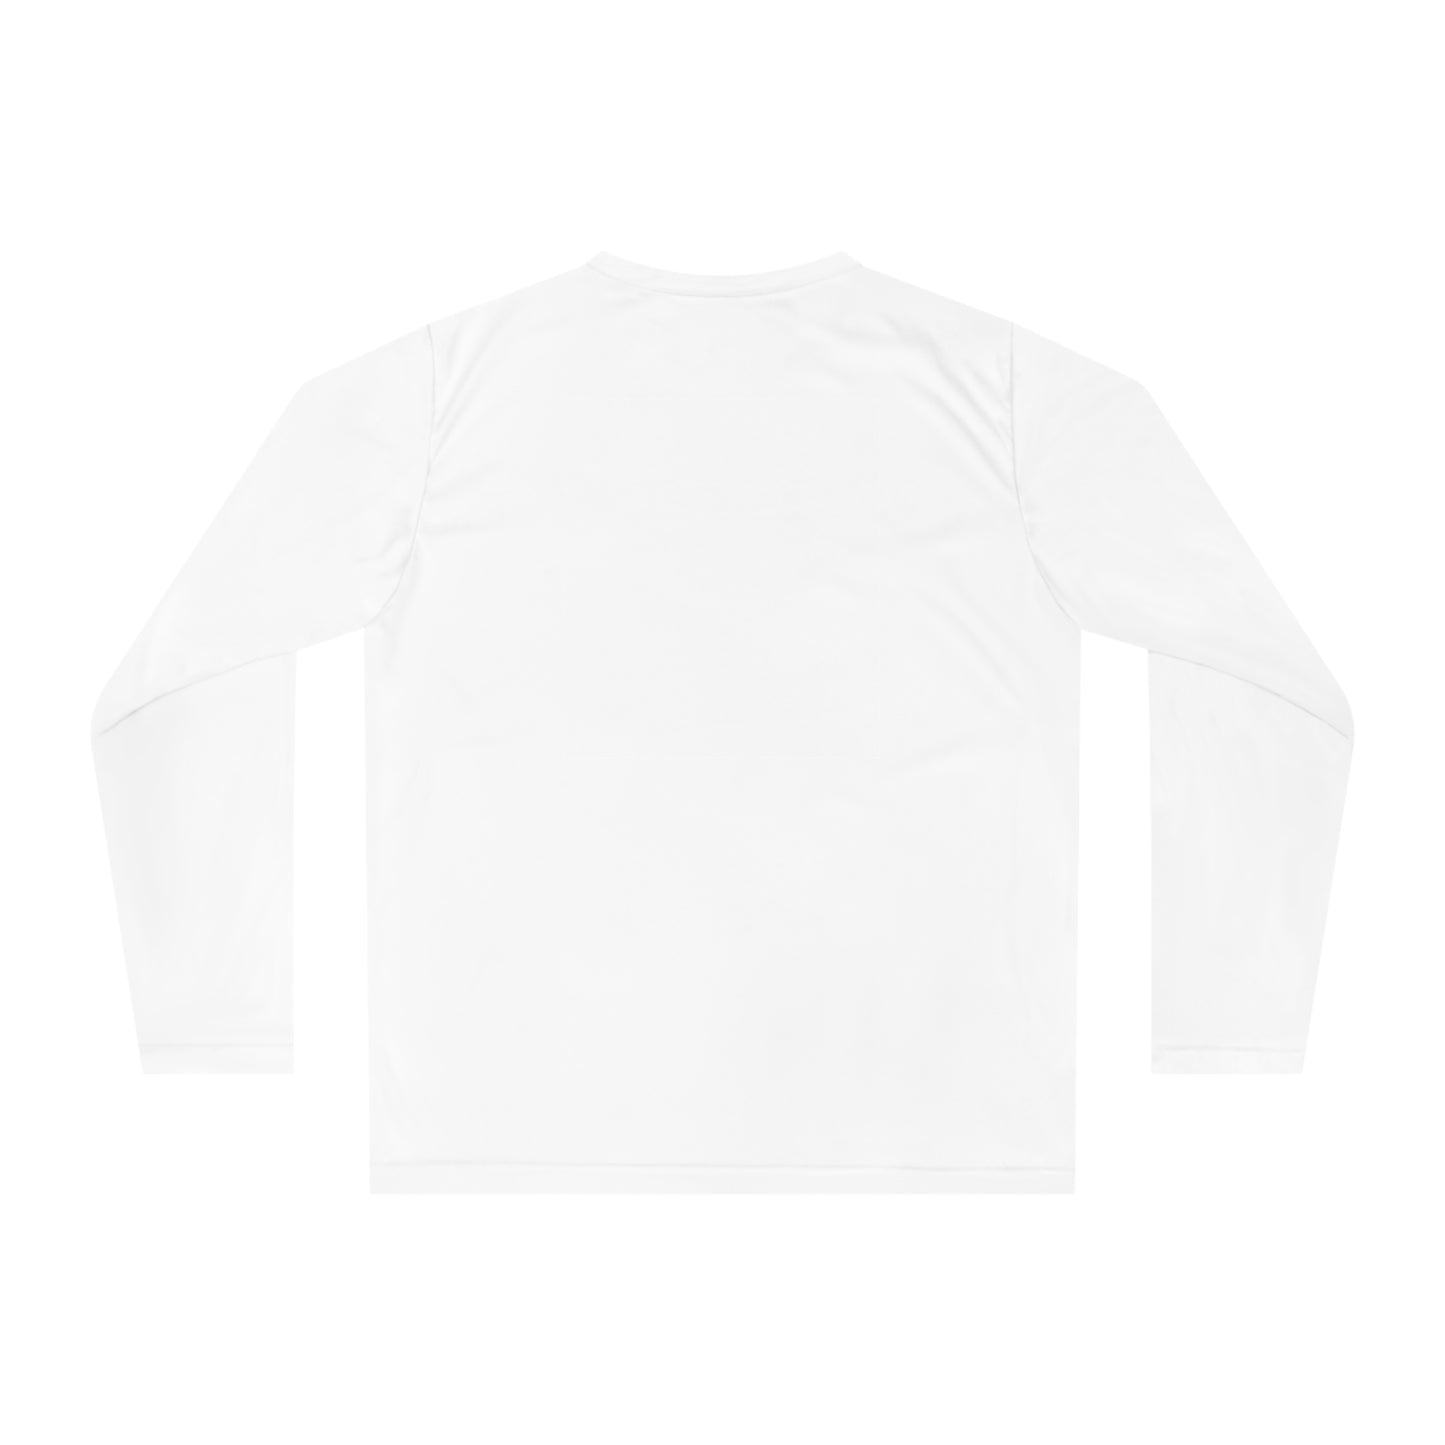 Softball Cutout - Team 365 Unisex Performance Long Sleeve Shirt